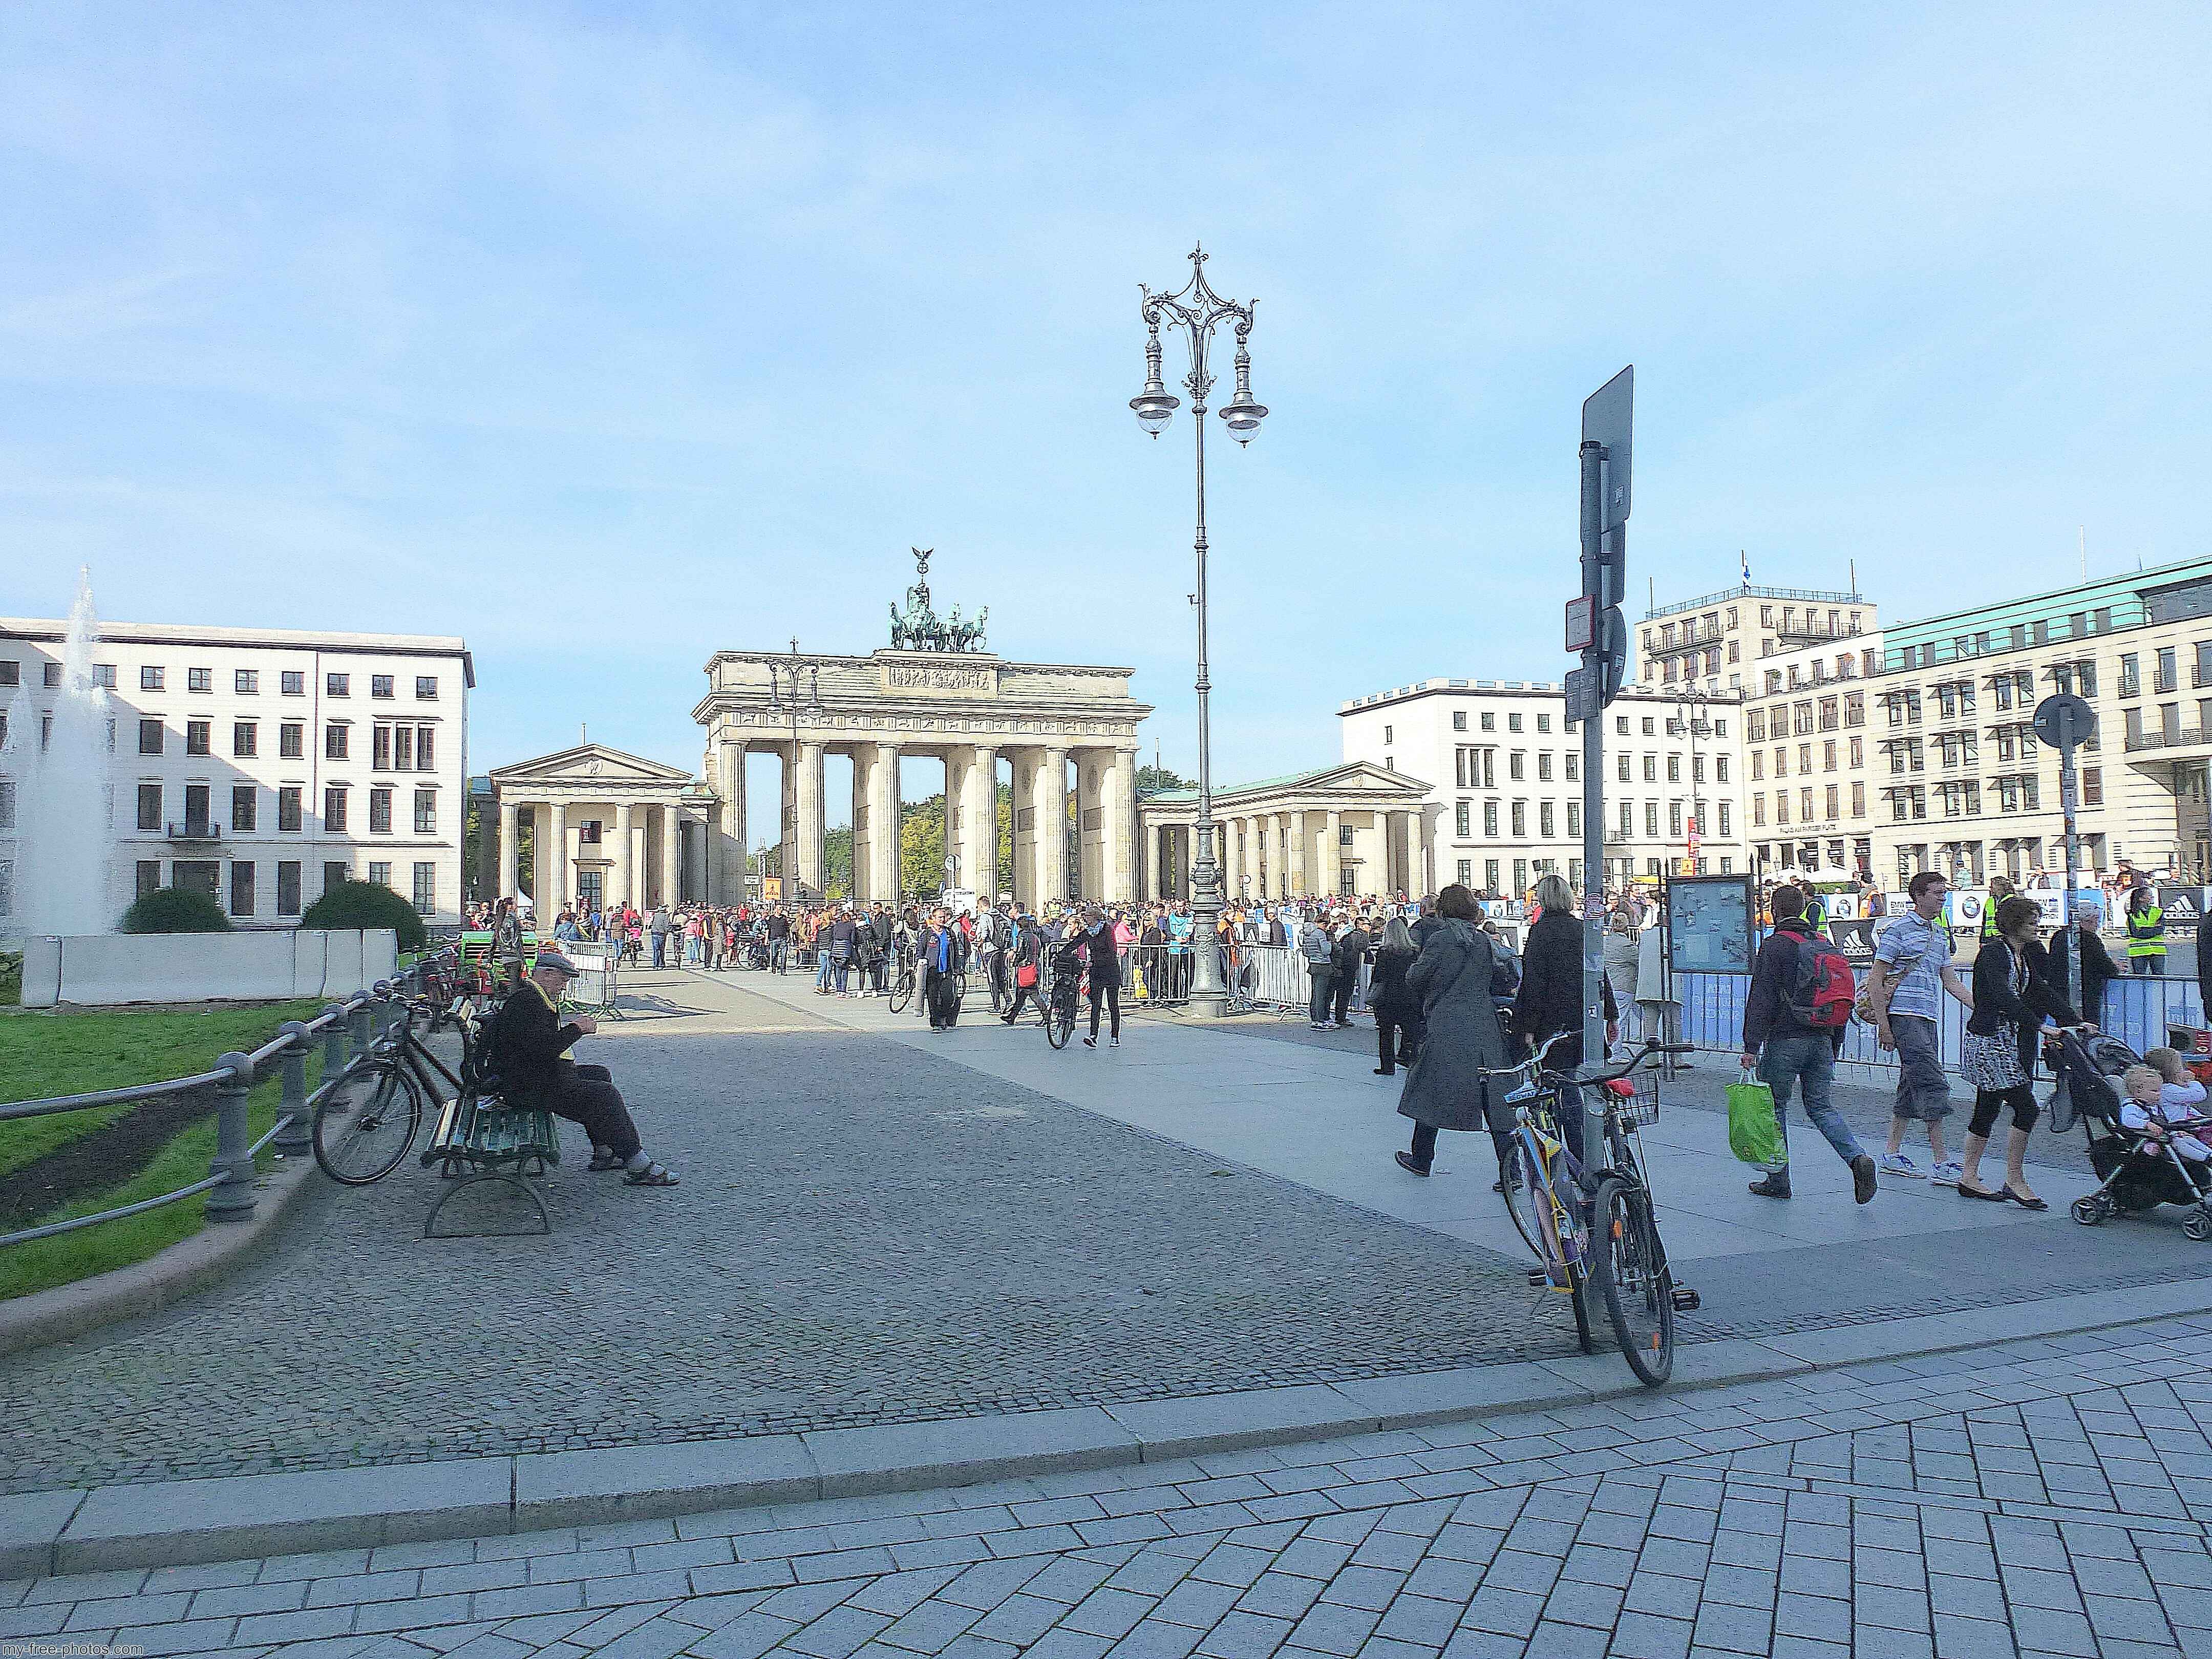 Berlin Brandenburger gate, Germany